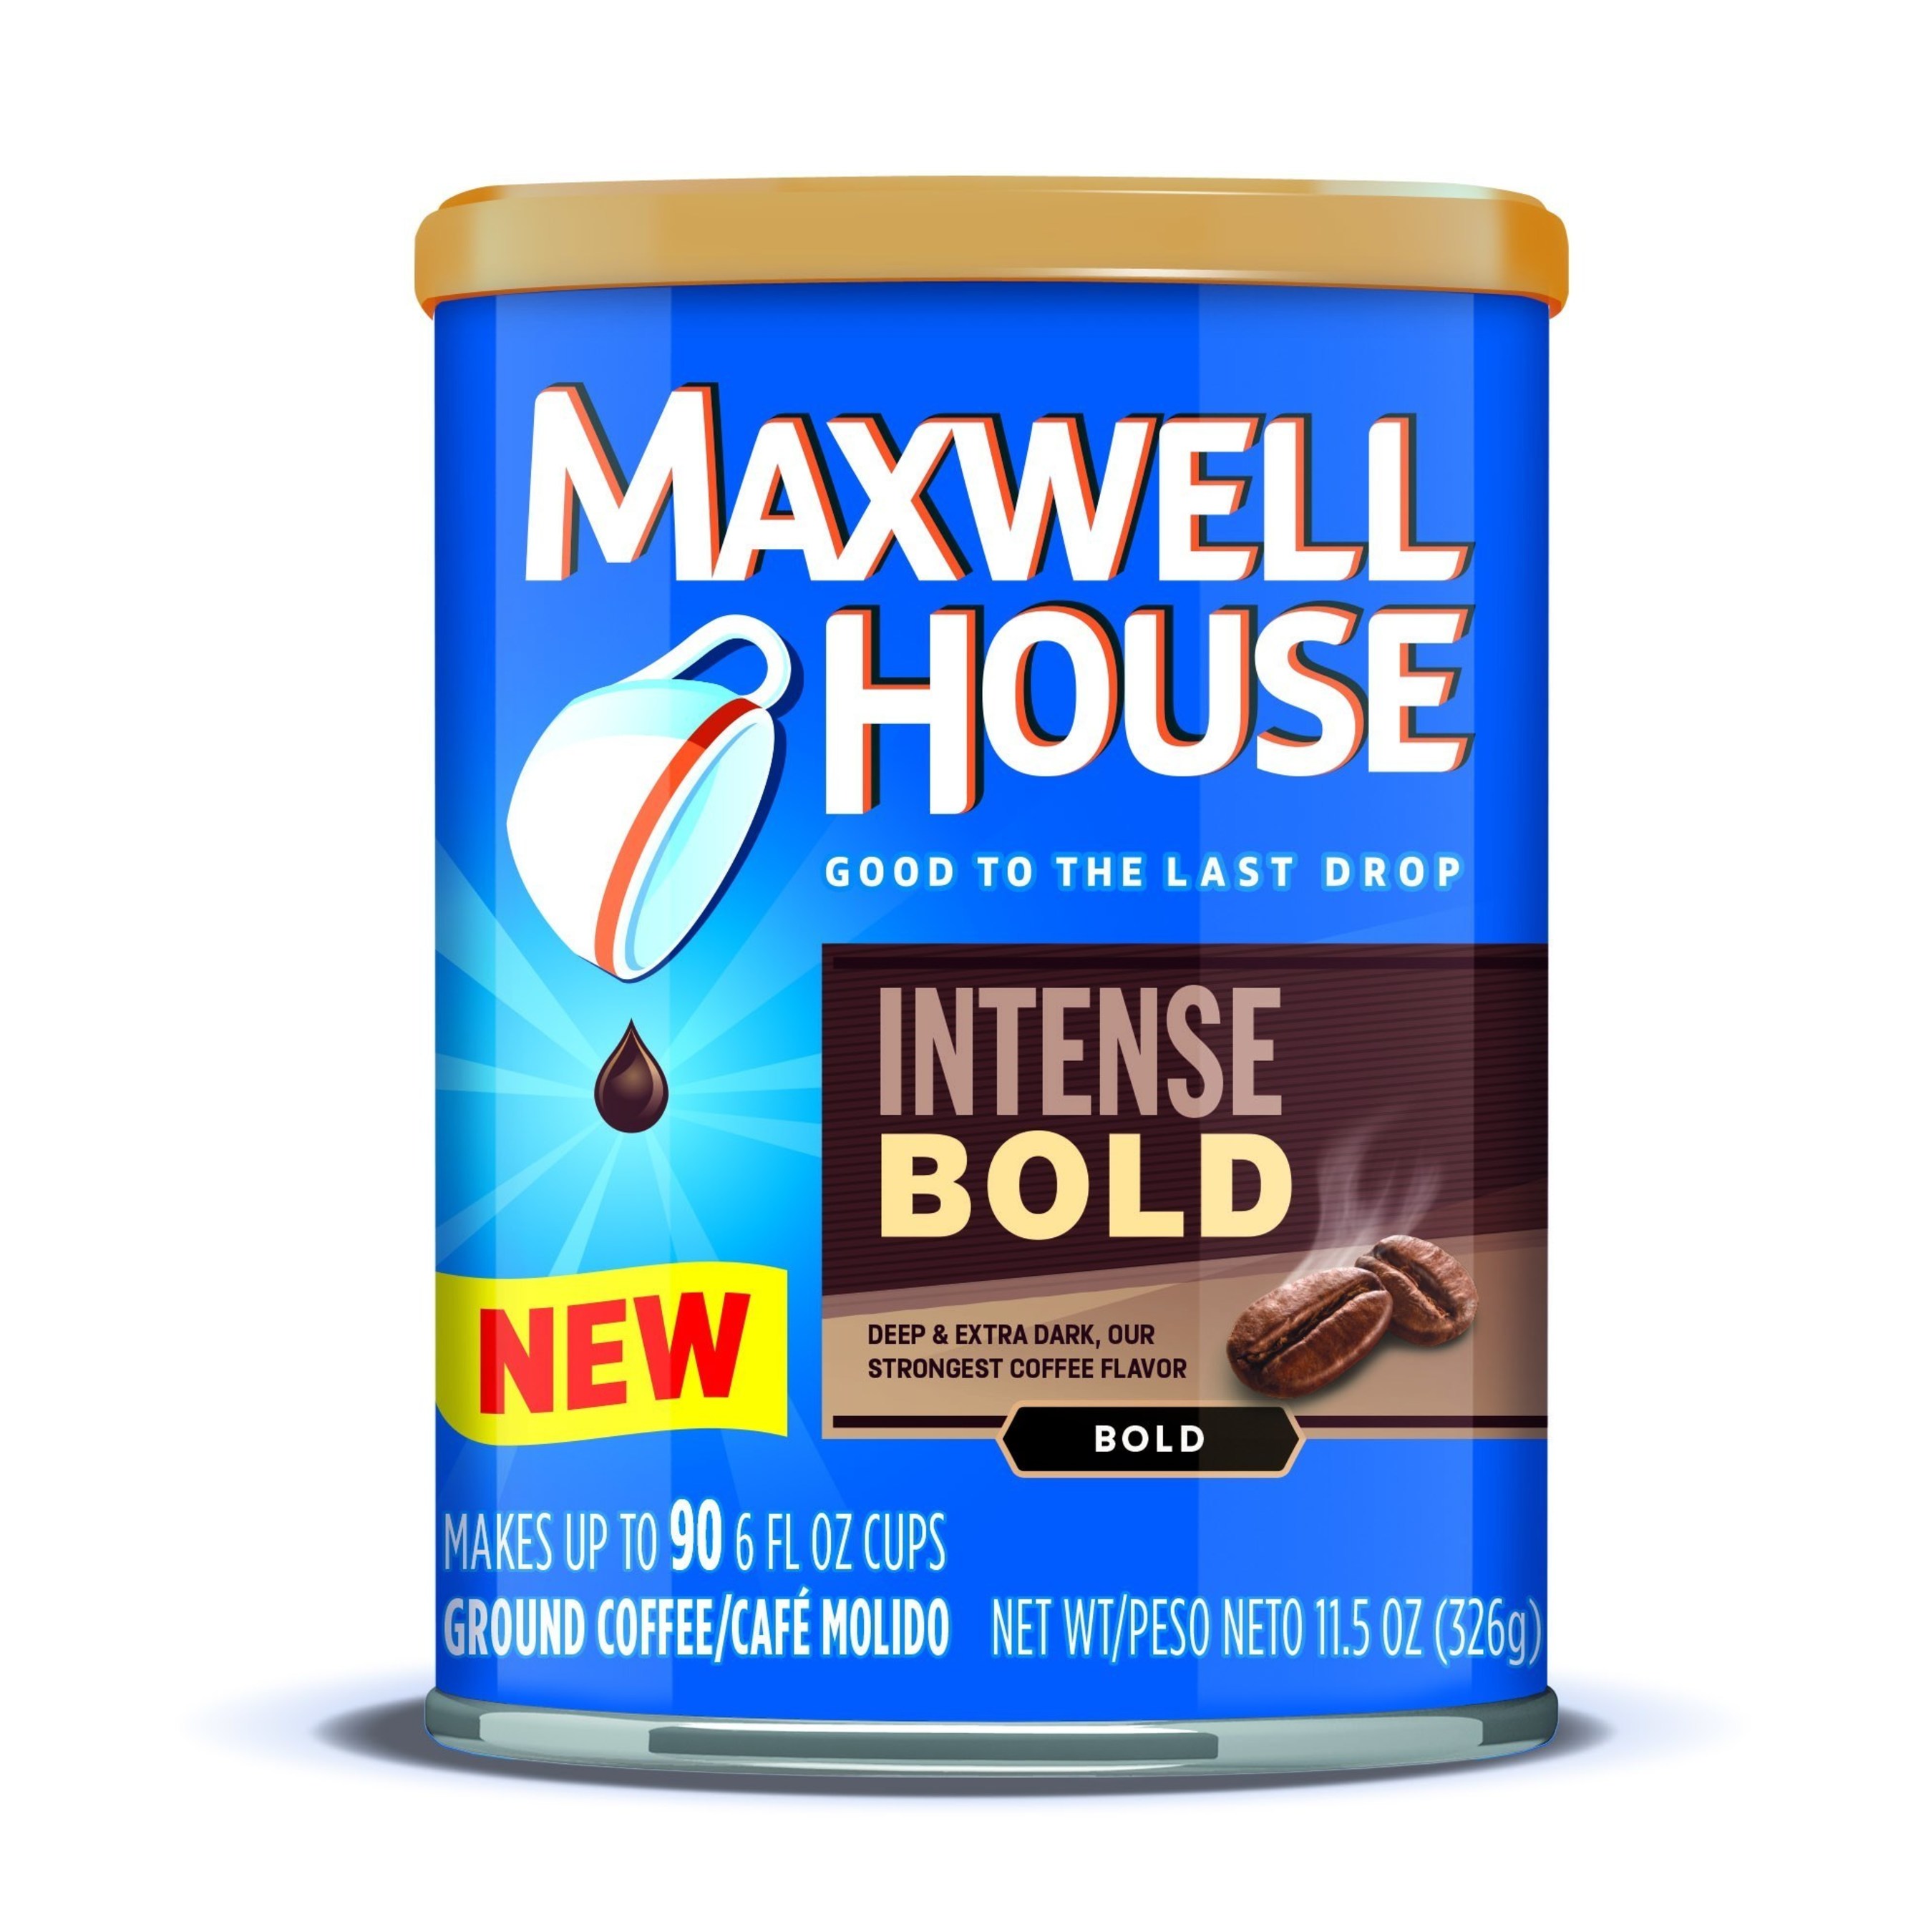 New dark roast Maxwell House blend, Intense Bold. (PRNewsFoto/Maxwell House)